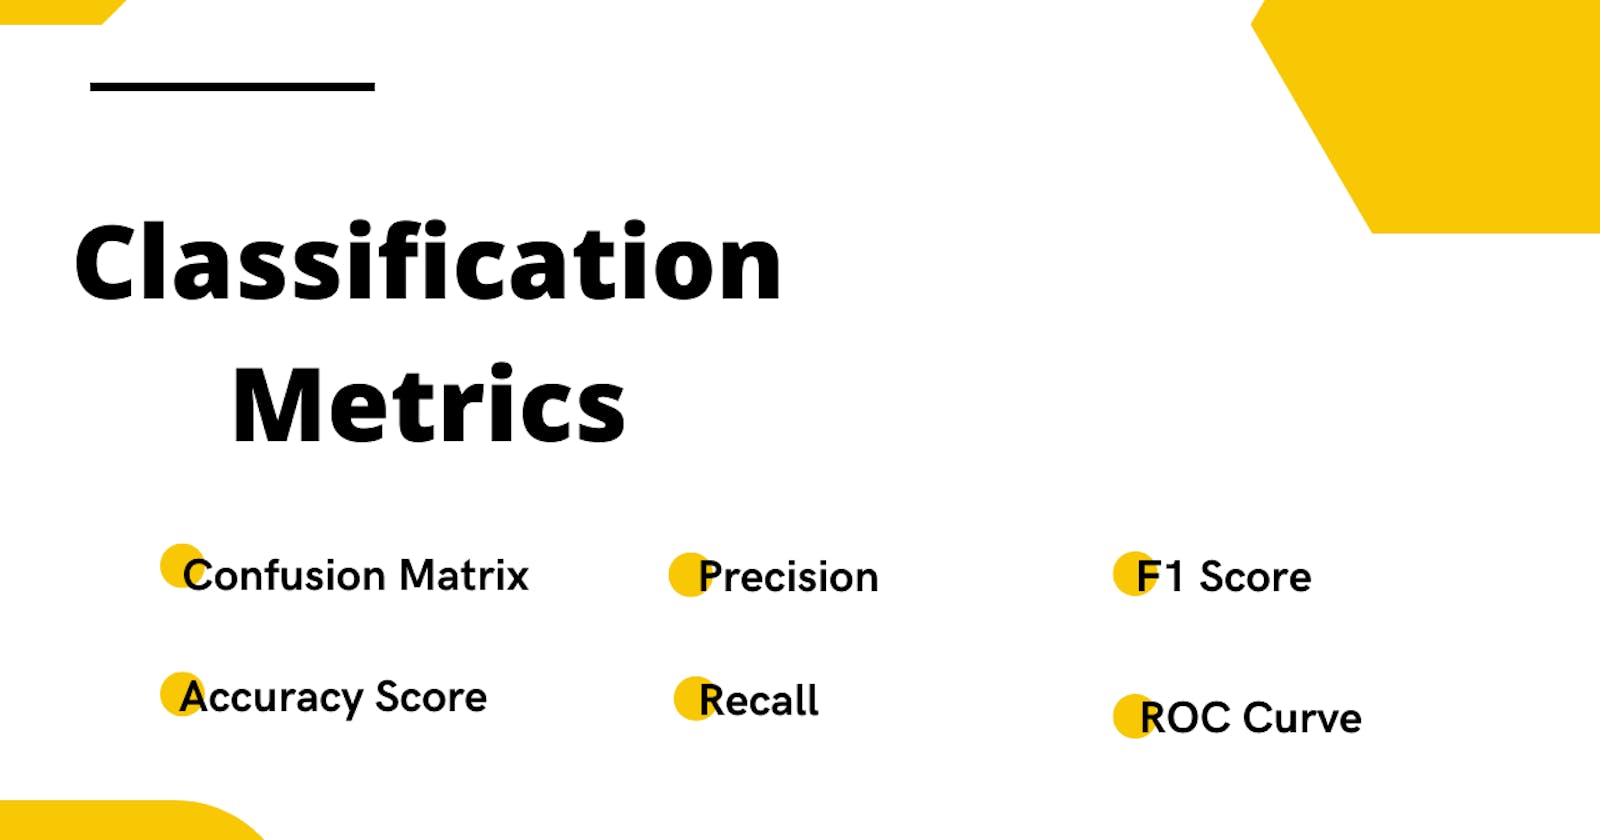 Classification metrics for more promising model performance.